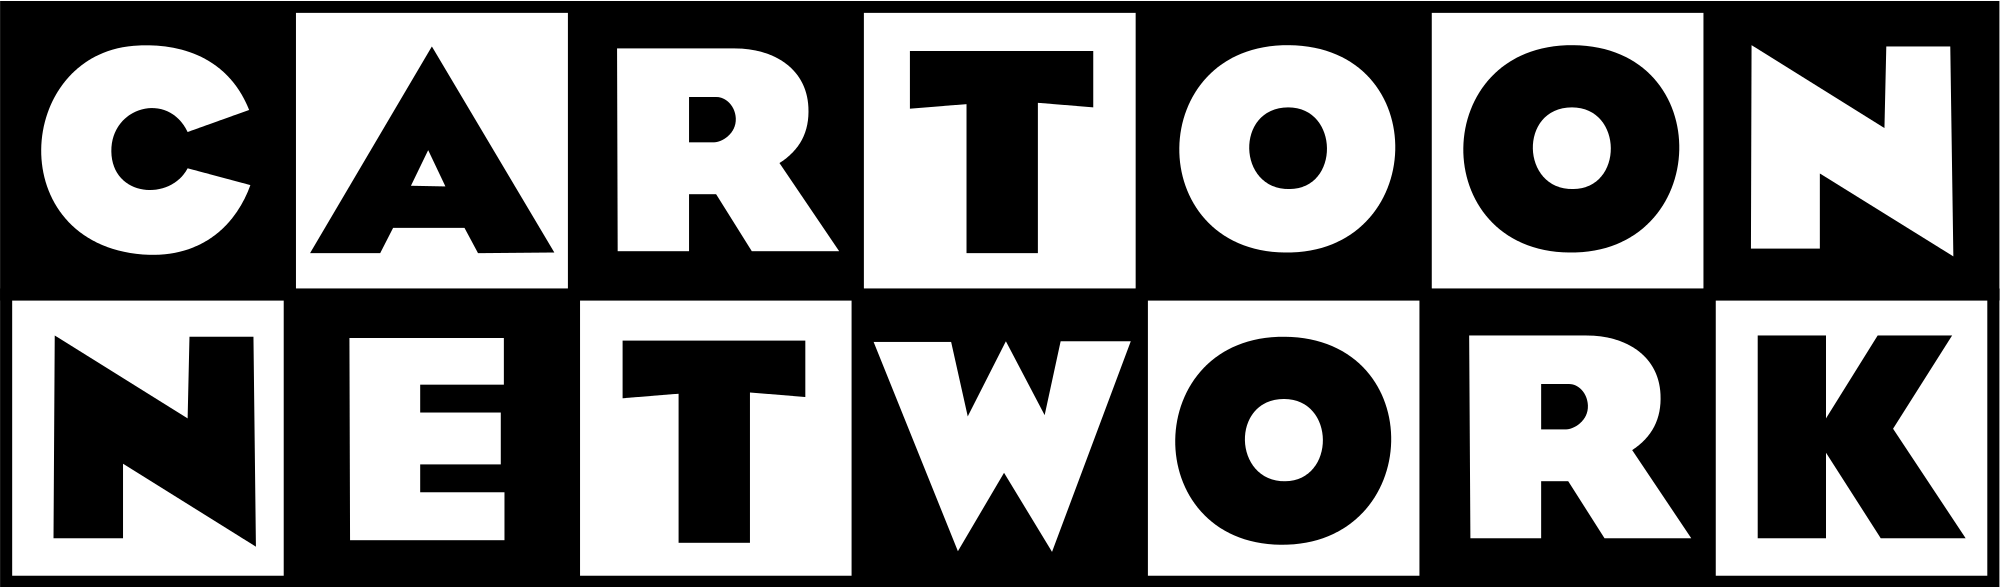 Cartoon Network Black Logo - File:Cartoon Network 1992 logo.svg - Wikimedia Commons